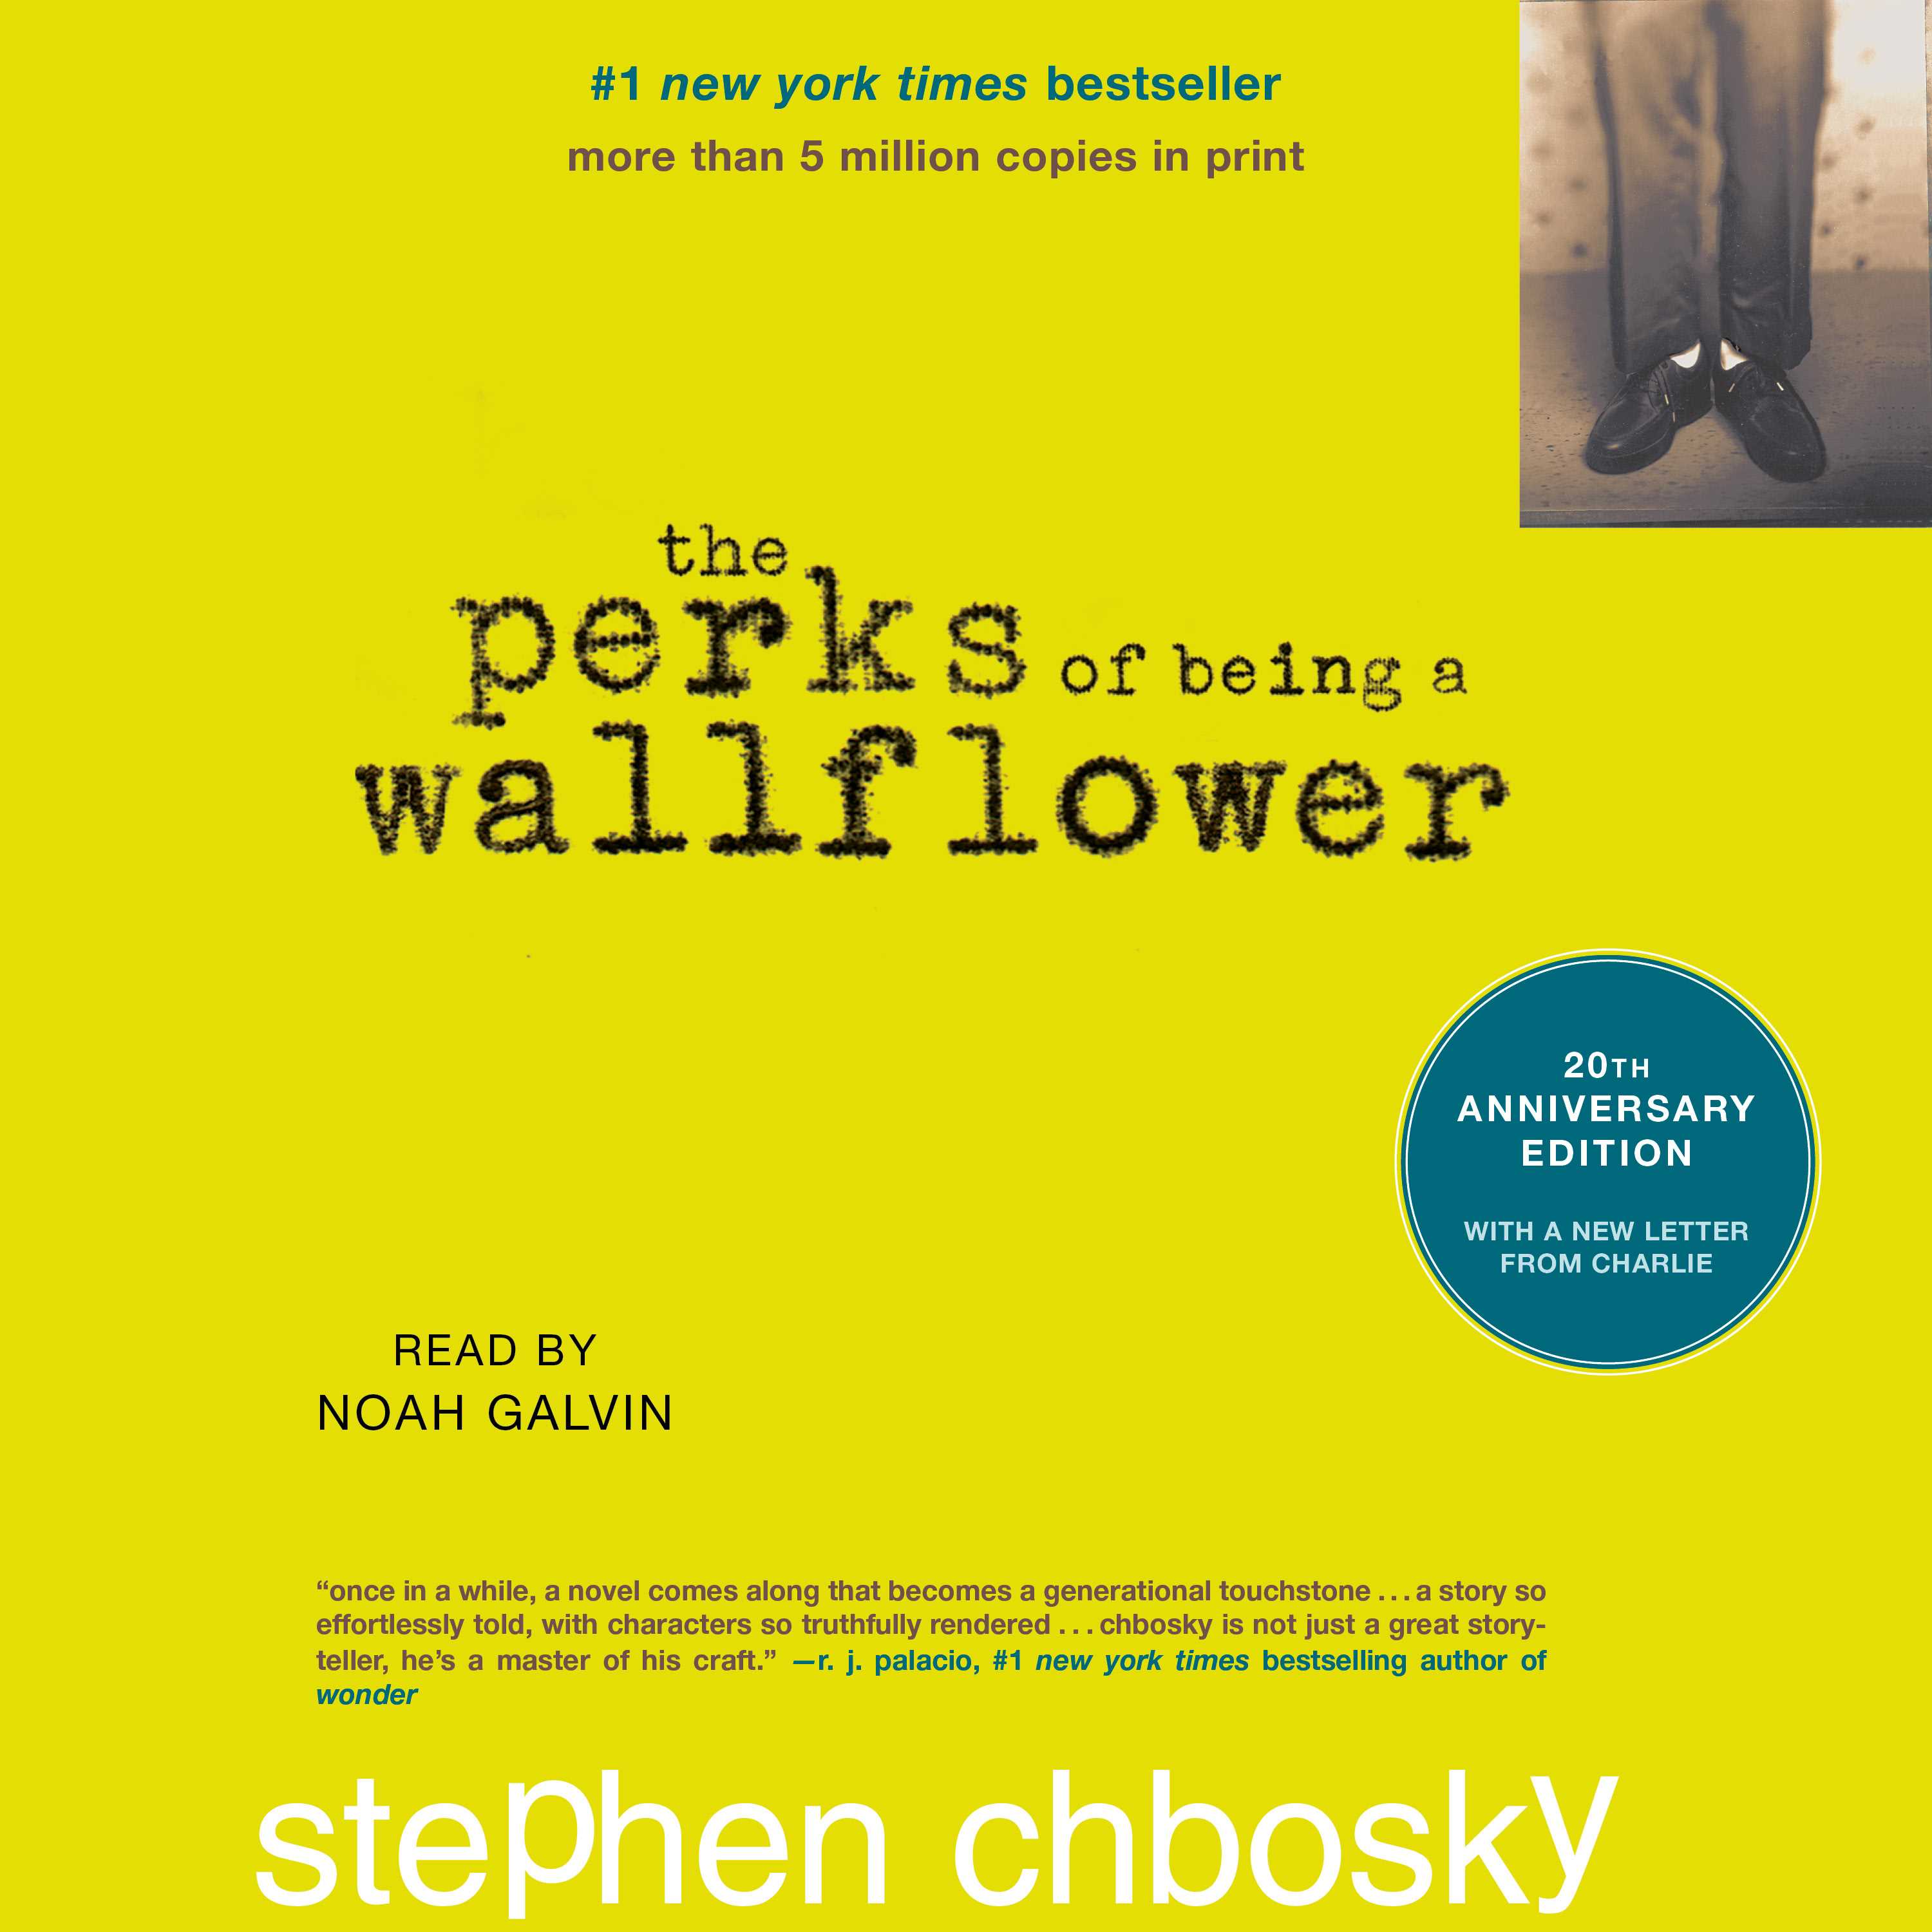 Stephen Chbosky: The perks of being a wallflower (Paperback, 1999, MTV Books/Pocket Books)